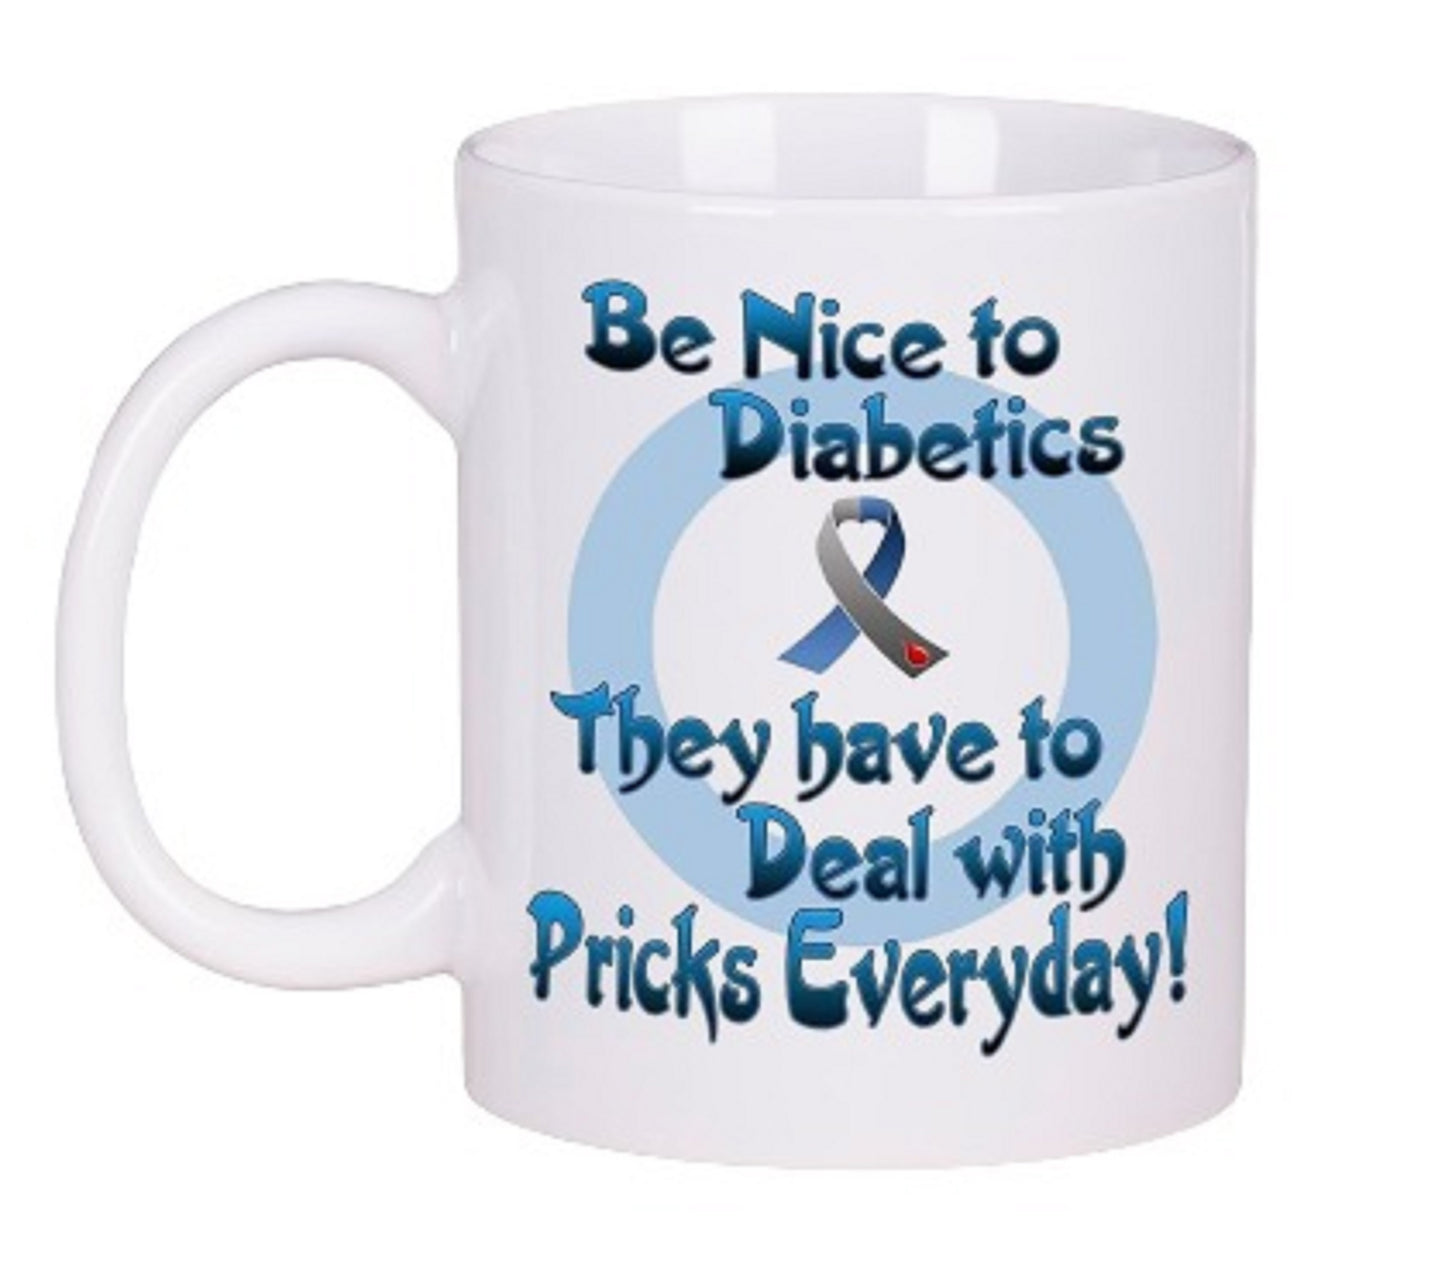  Funny Be Nice to Diabetics Mug by Free Spirit Accessories sold by Free Spirit Accessories